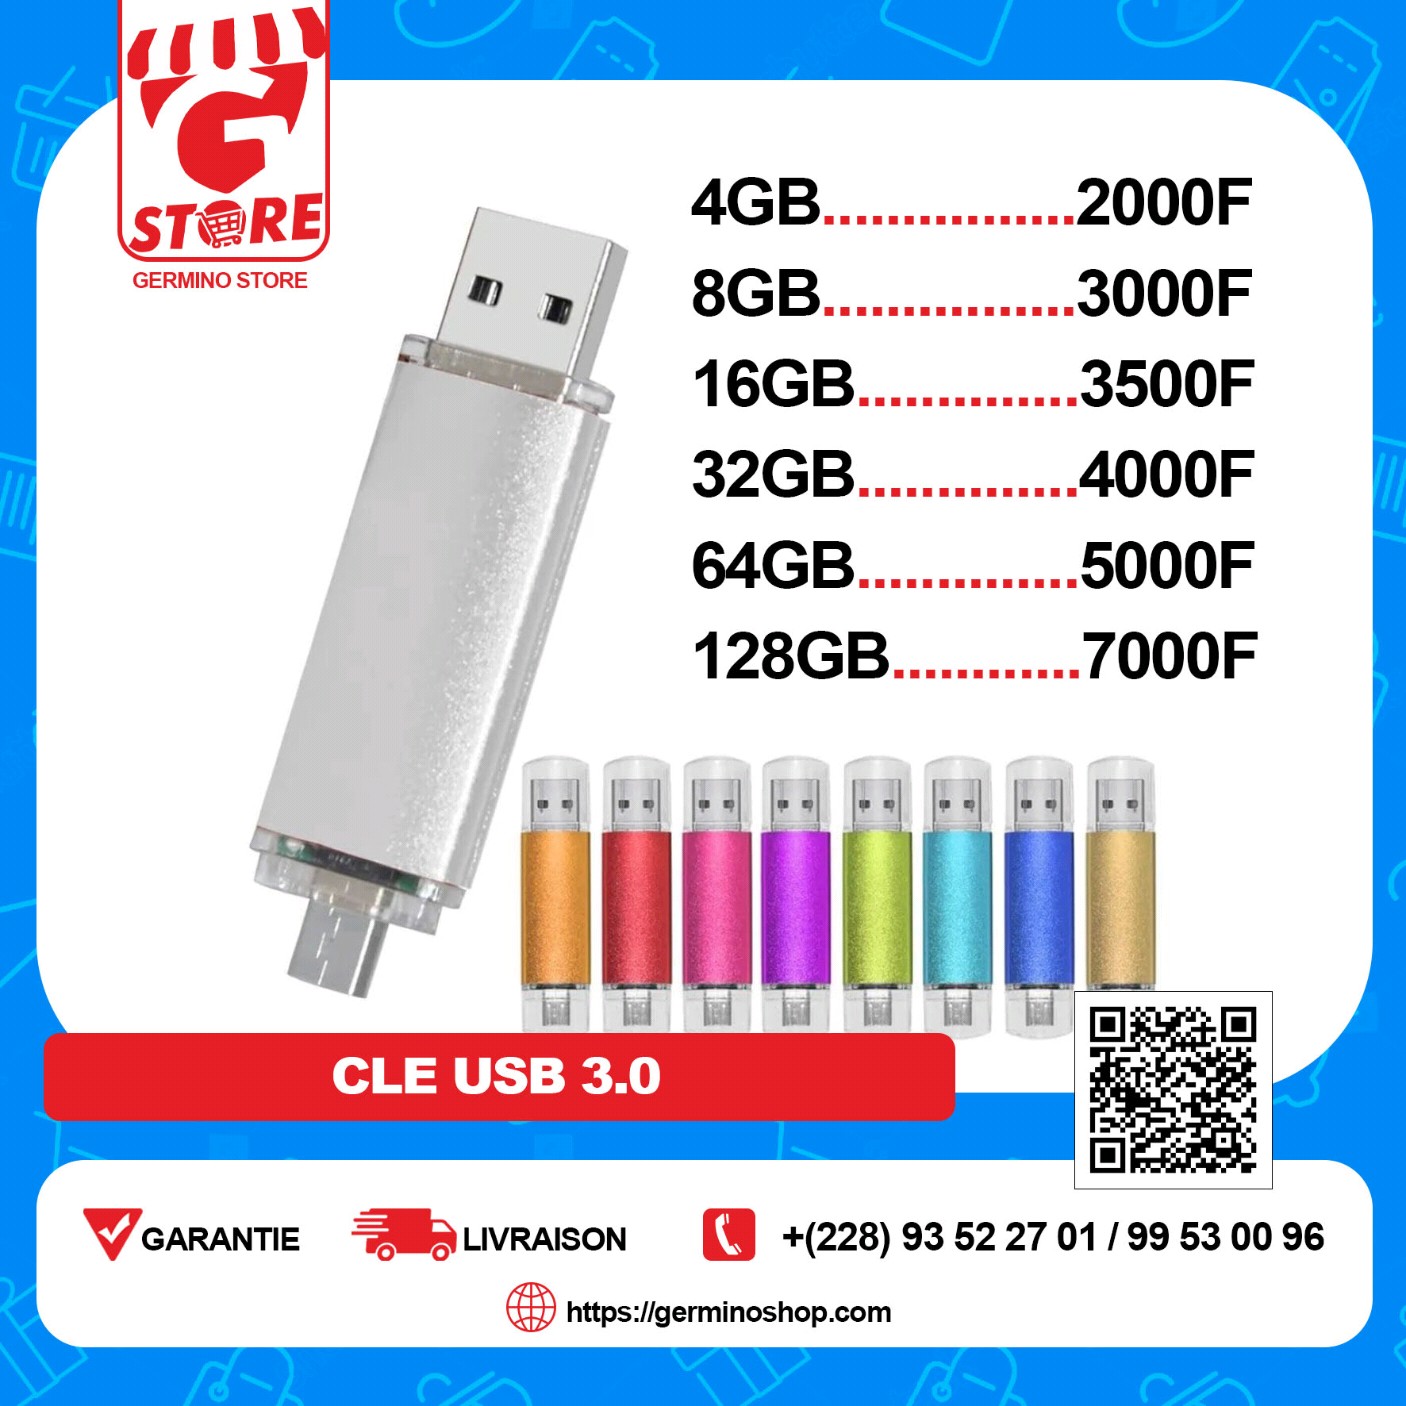 CLE USB 